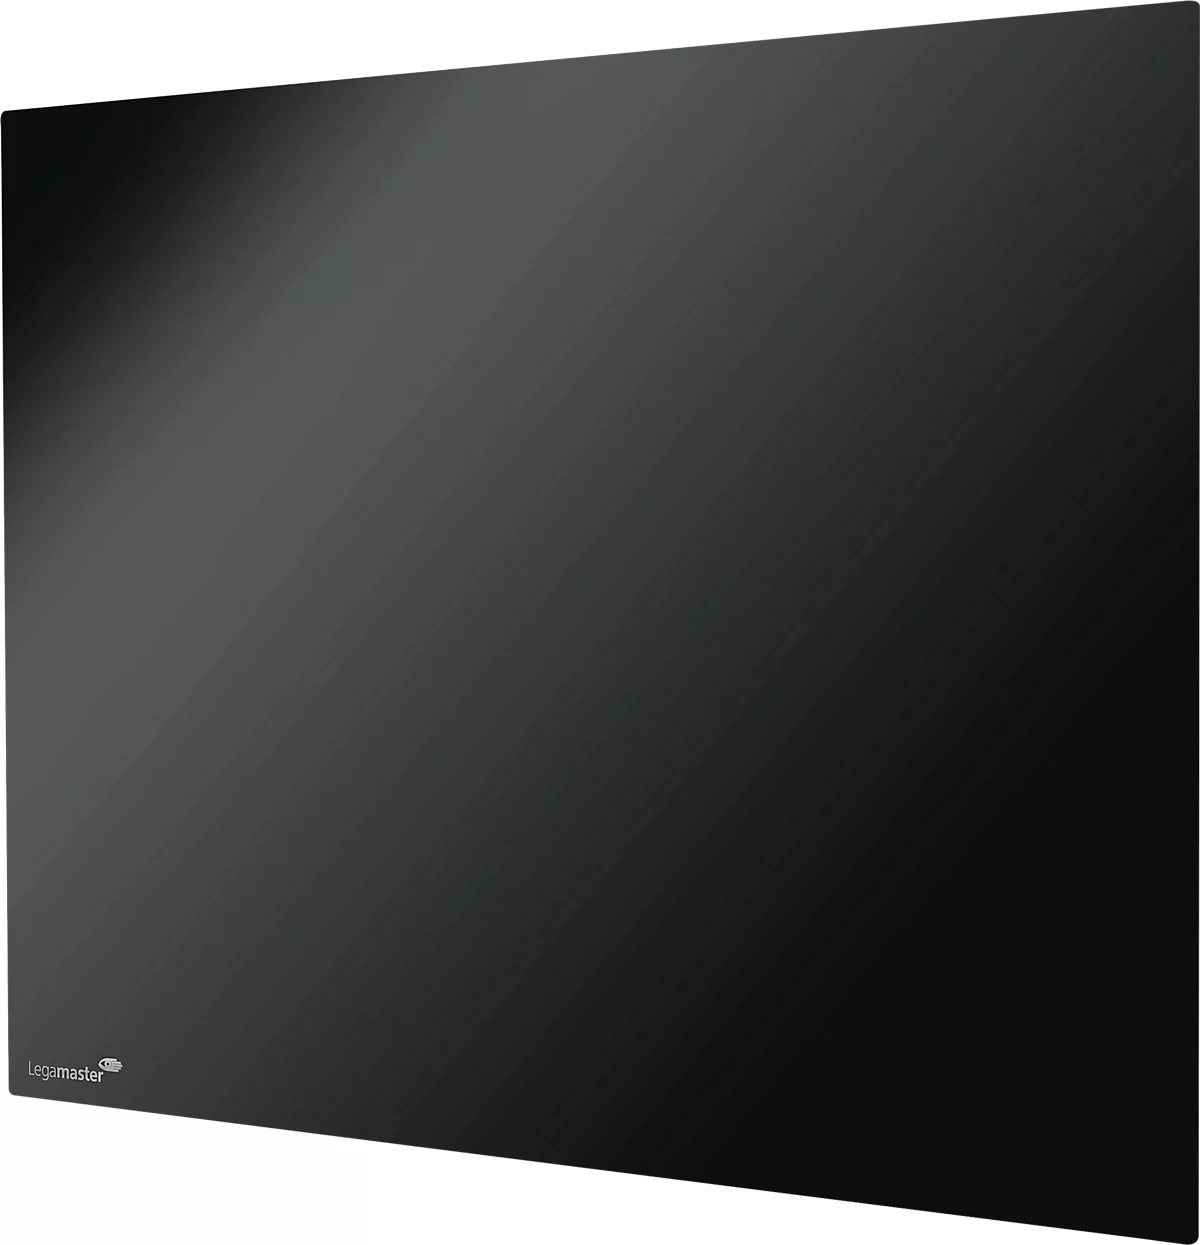 Tablero de cristal Legamaster Colour 7-104635, magnético, An 400 x Al 600 mm, negro